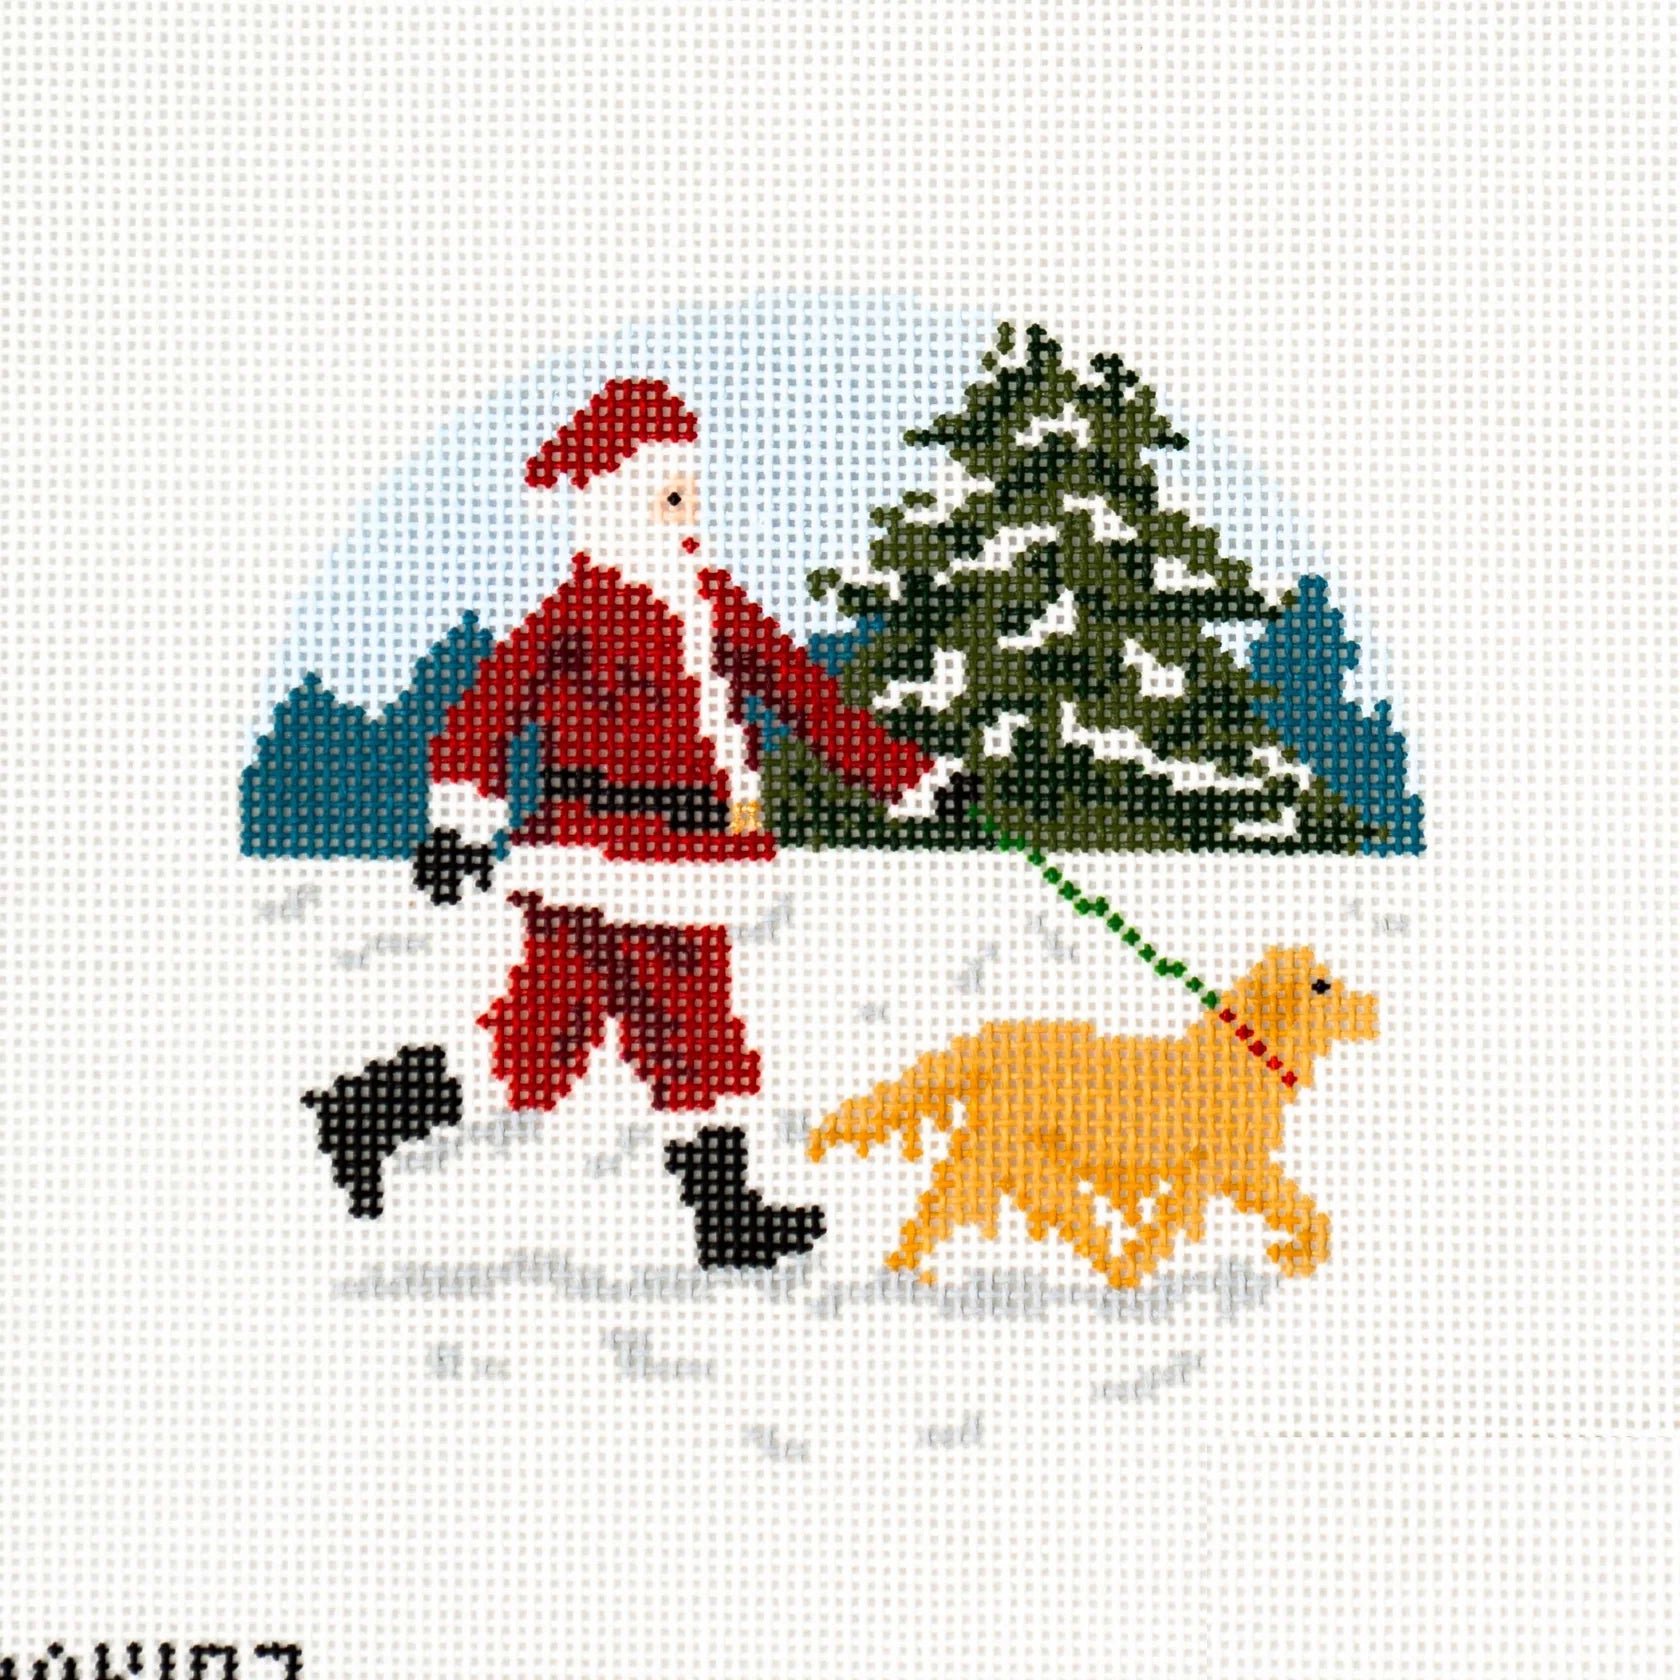 Sporty Santa - Dog Walking Santa (Golden Retriever) - The Flying Needles